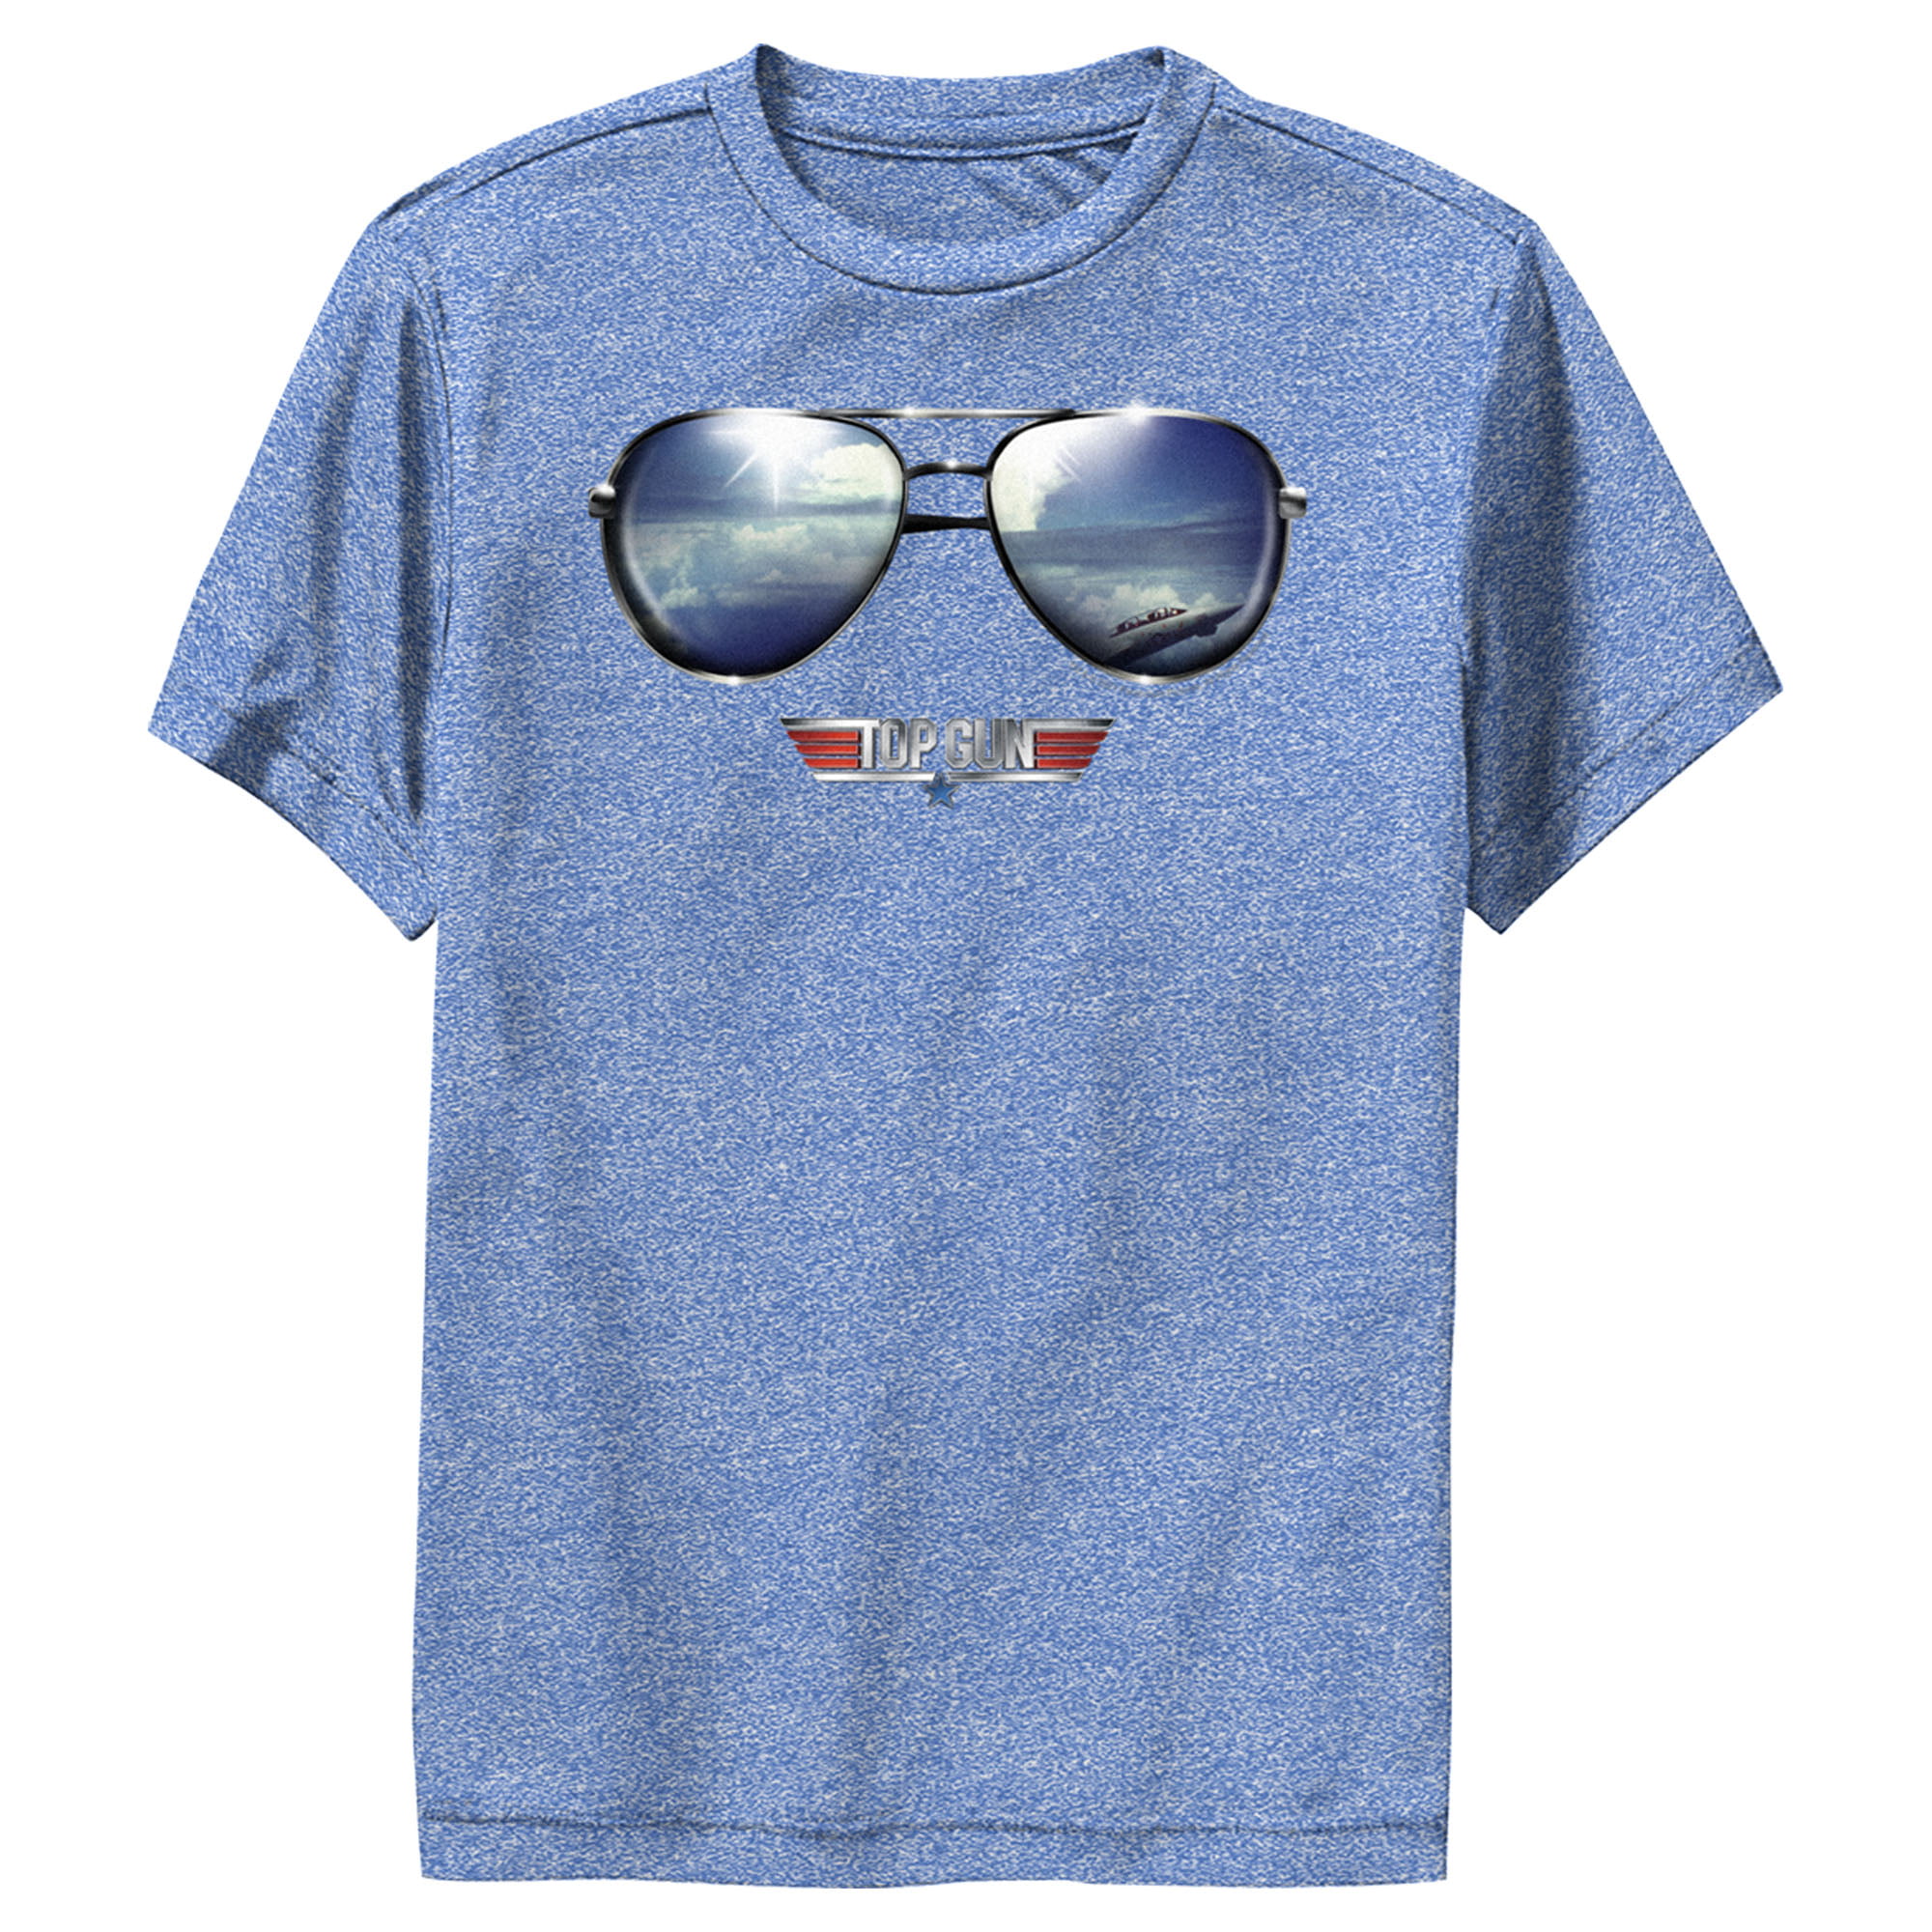 Boy's Top Gun Aviator Sunglasses Reflection Logo Performance Graphic Tee  Royal Blue Heather Large